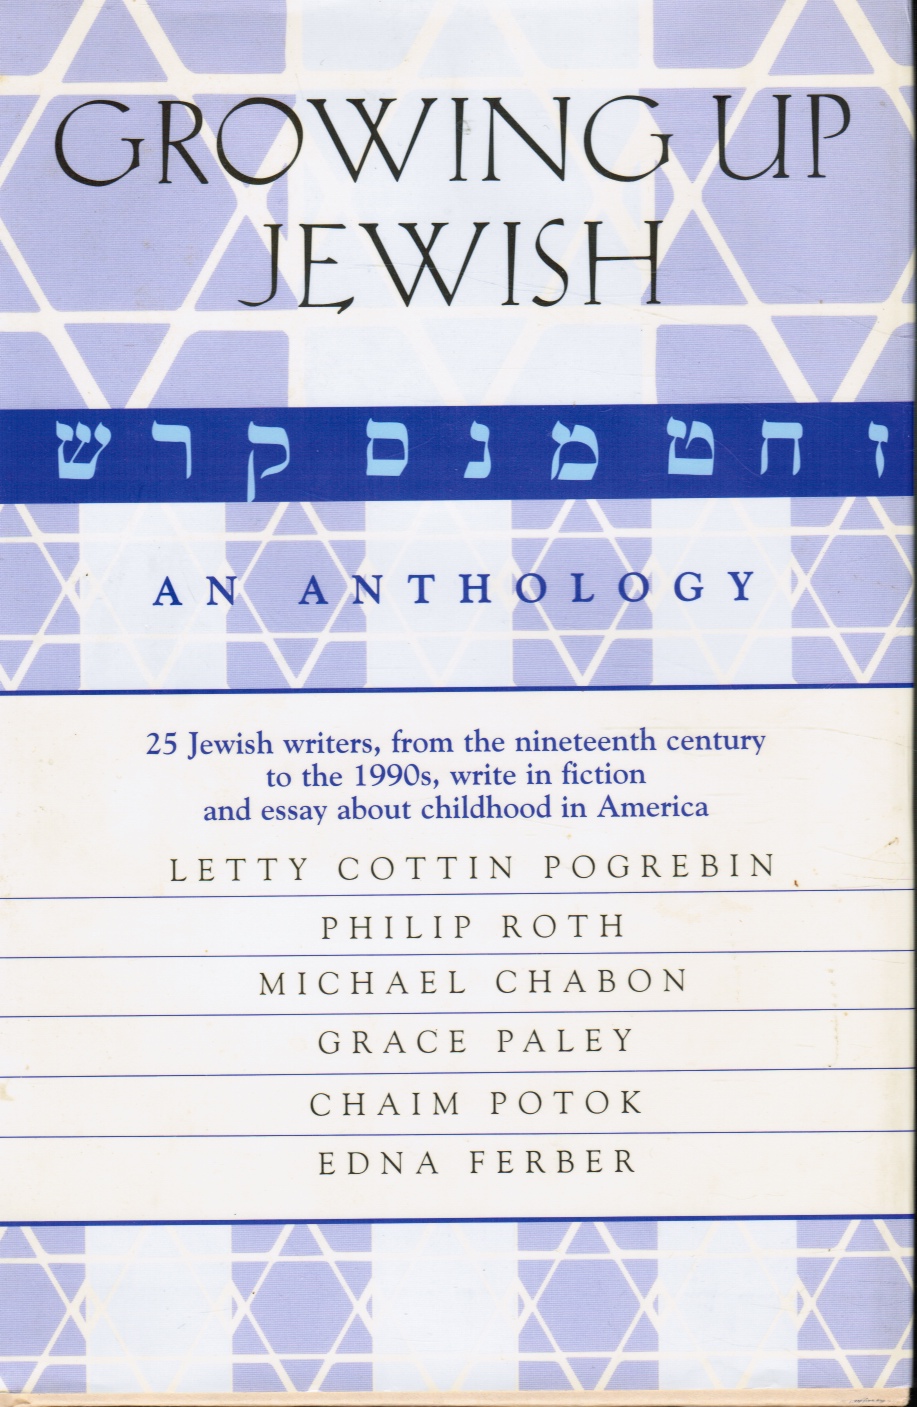 DAVID, JAY - Growing Up Jewish : An Anthology